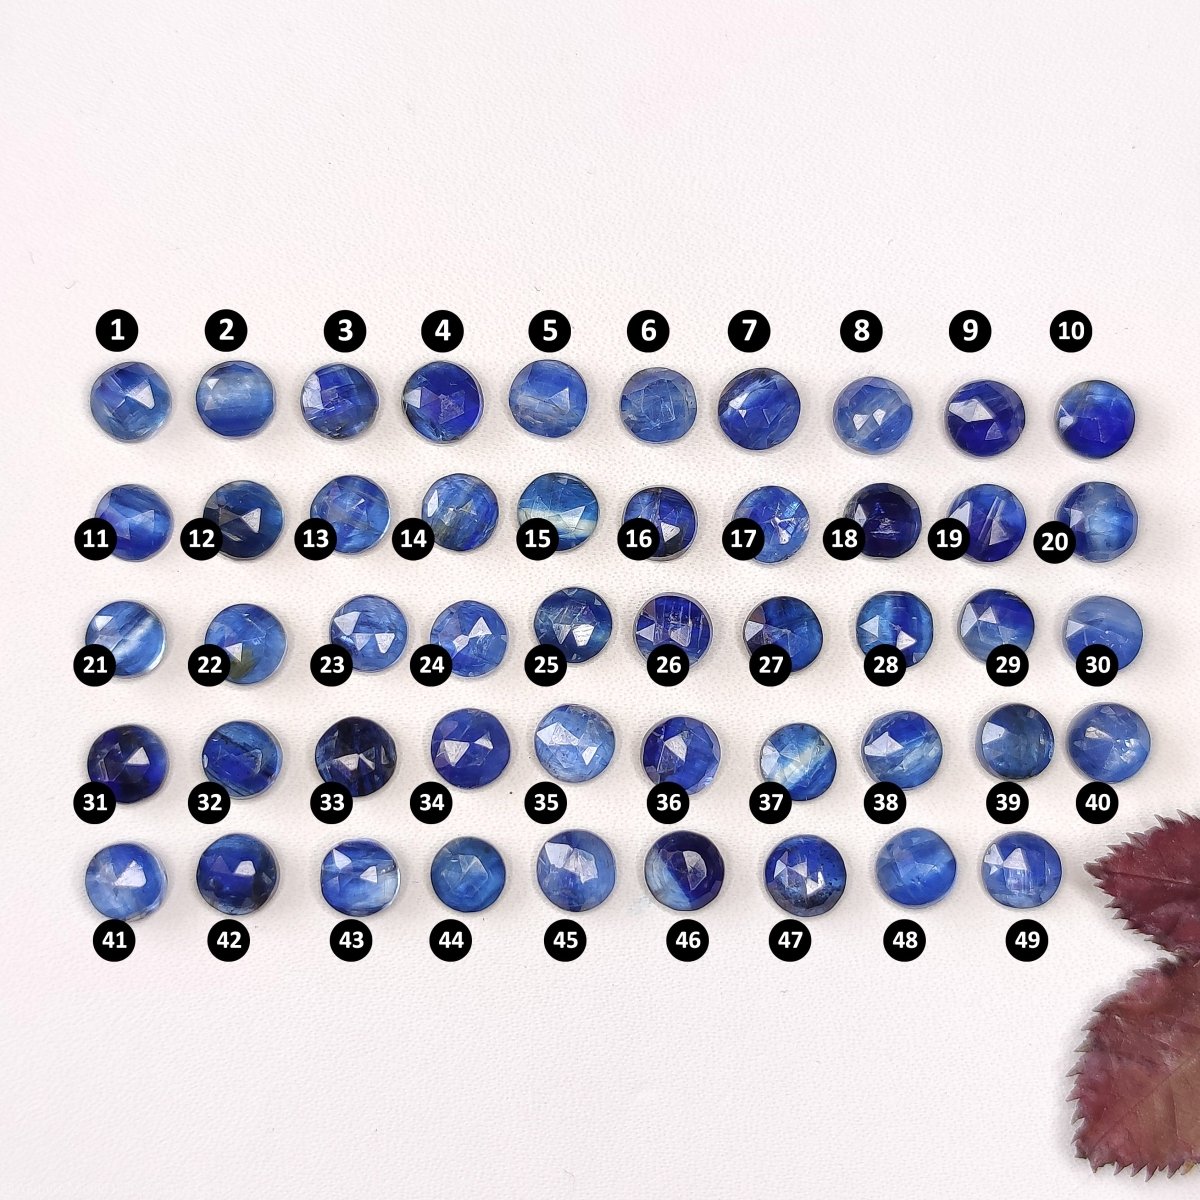 Blue Kyanite Cabochon 6mm - Rose Cut - Anima Mundi Crystals